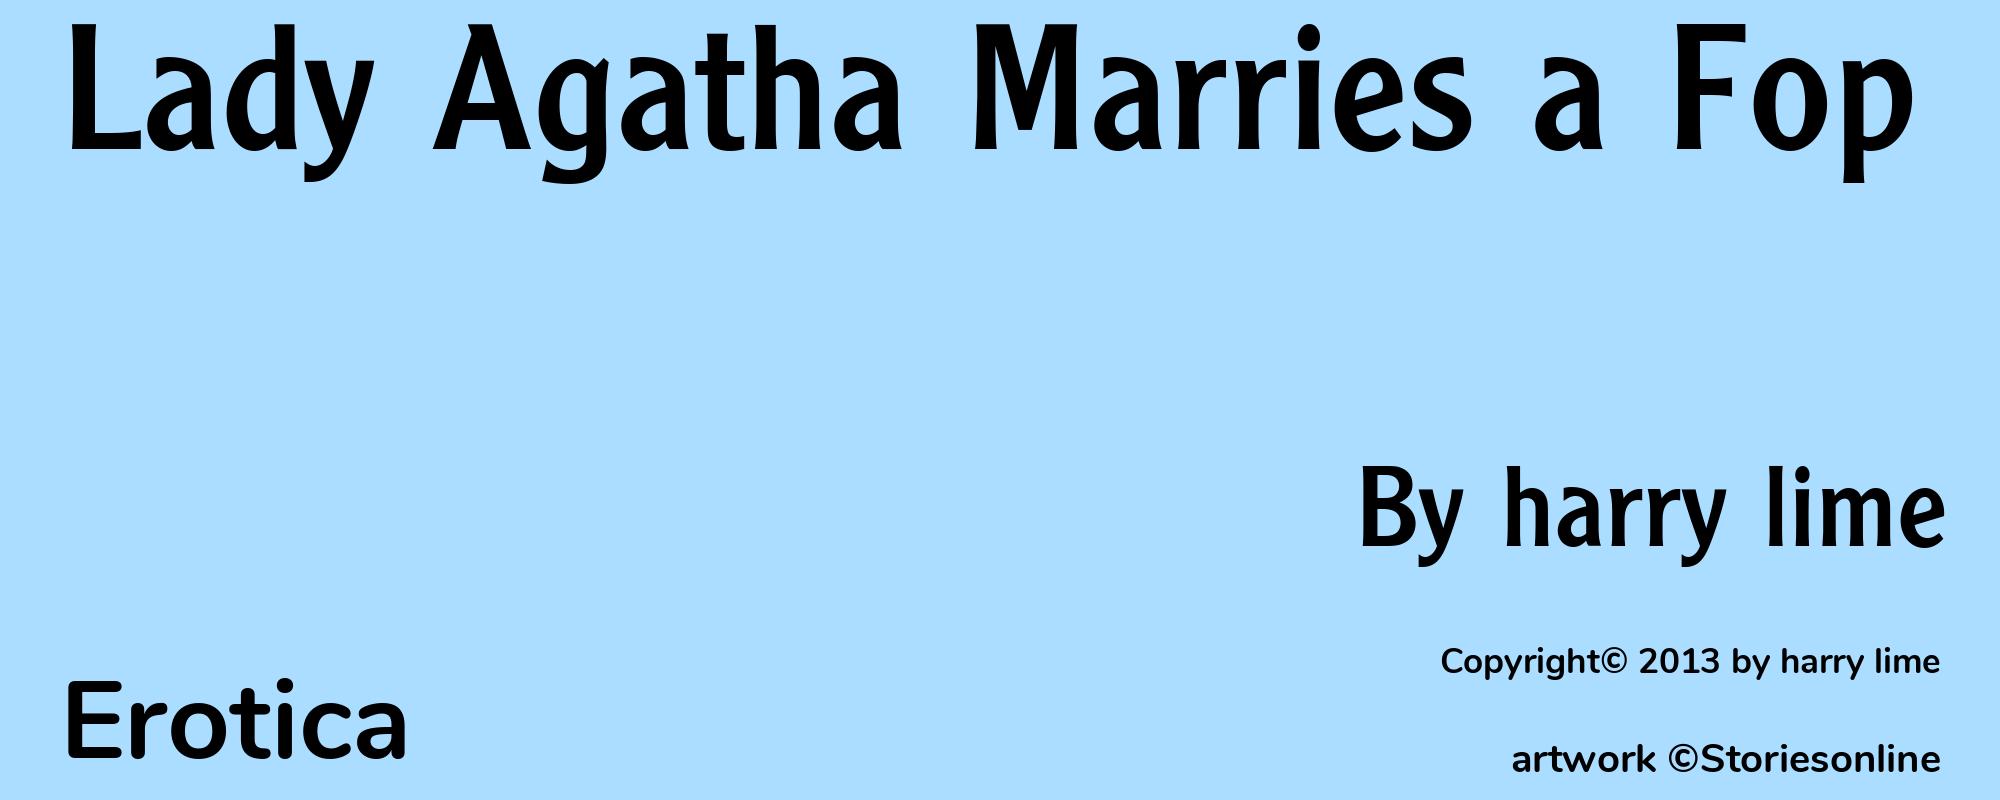 Lady Agatha Marries a Fop - Cover